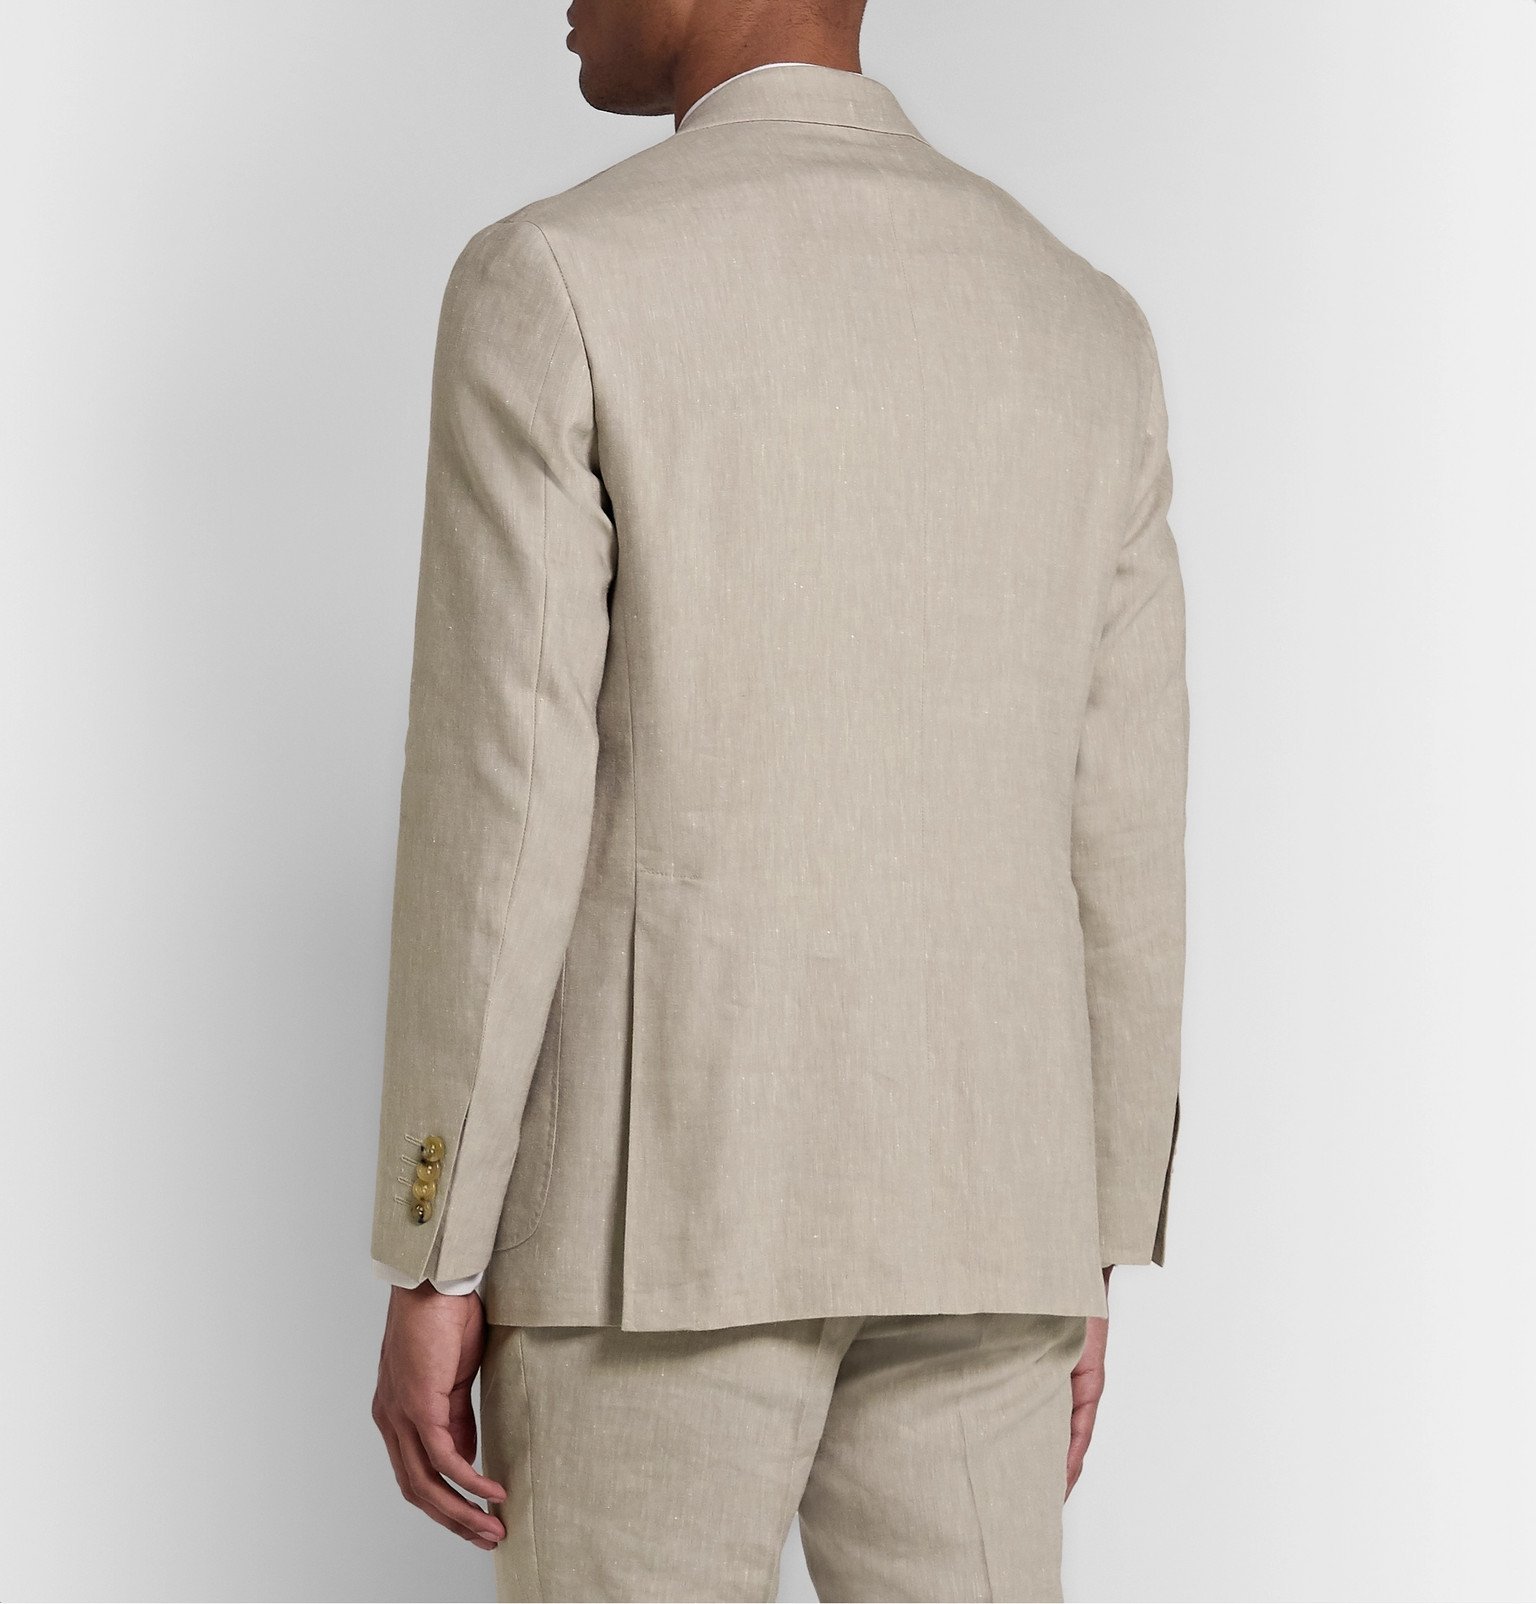 Canali - Beige Kei Slim-Fit Linen and Wool-Blend Suit Jacket - Neutrals ...